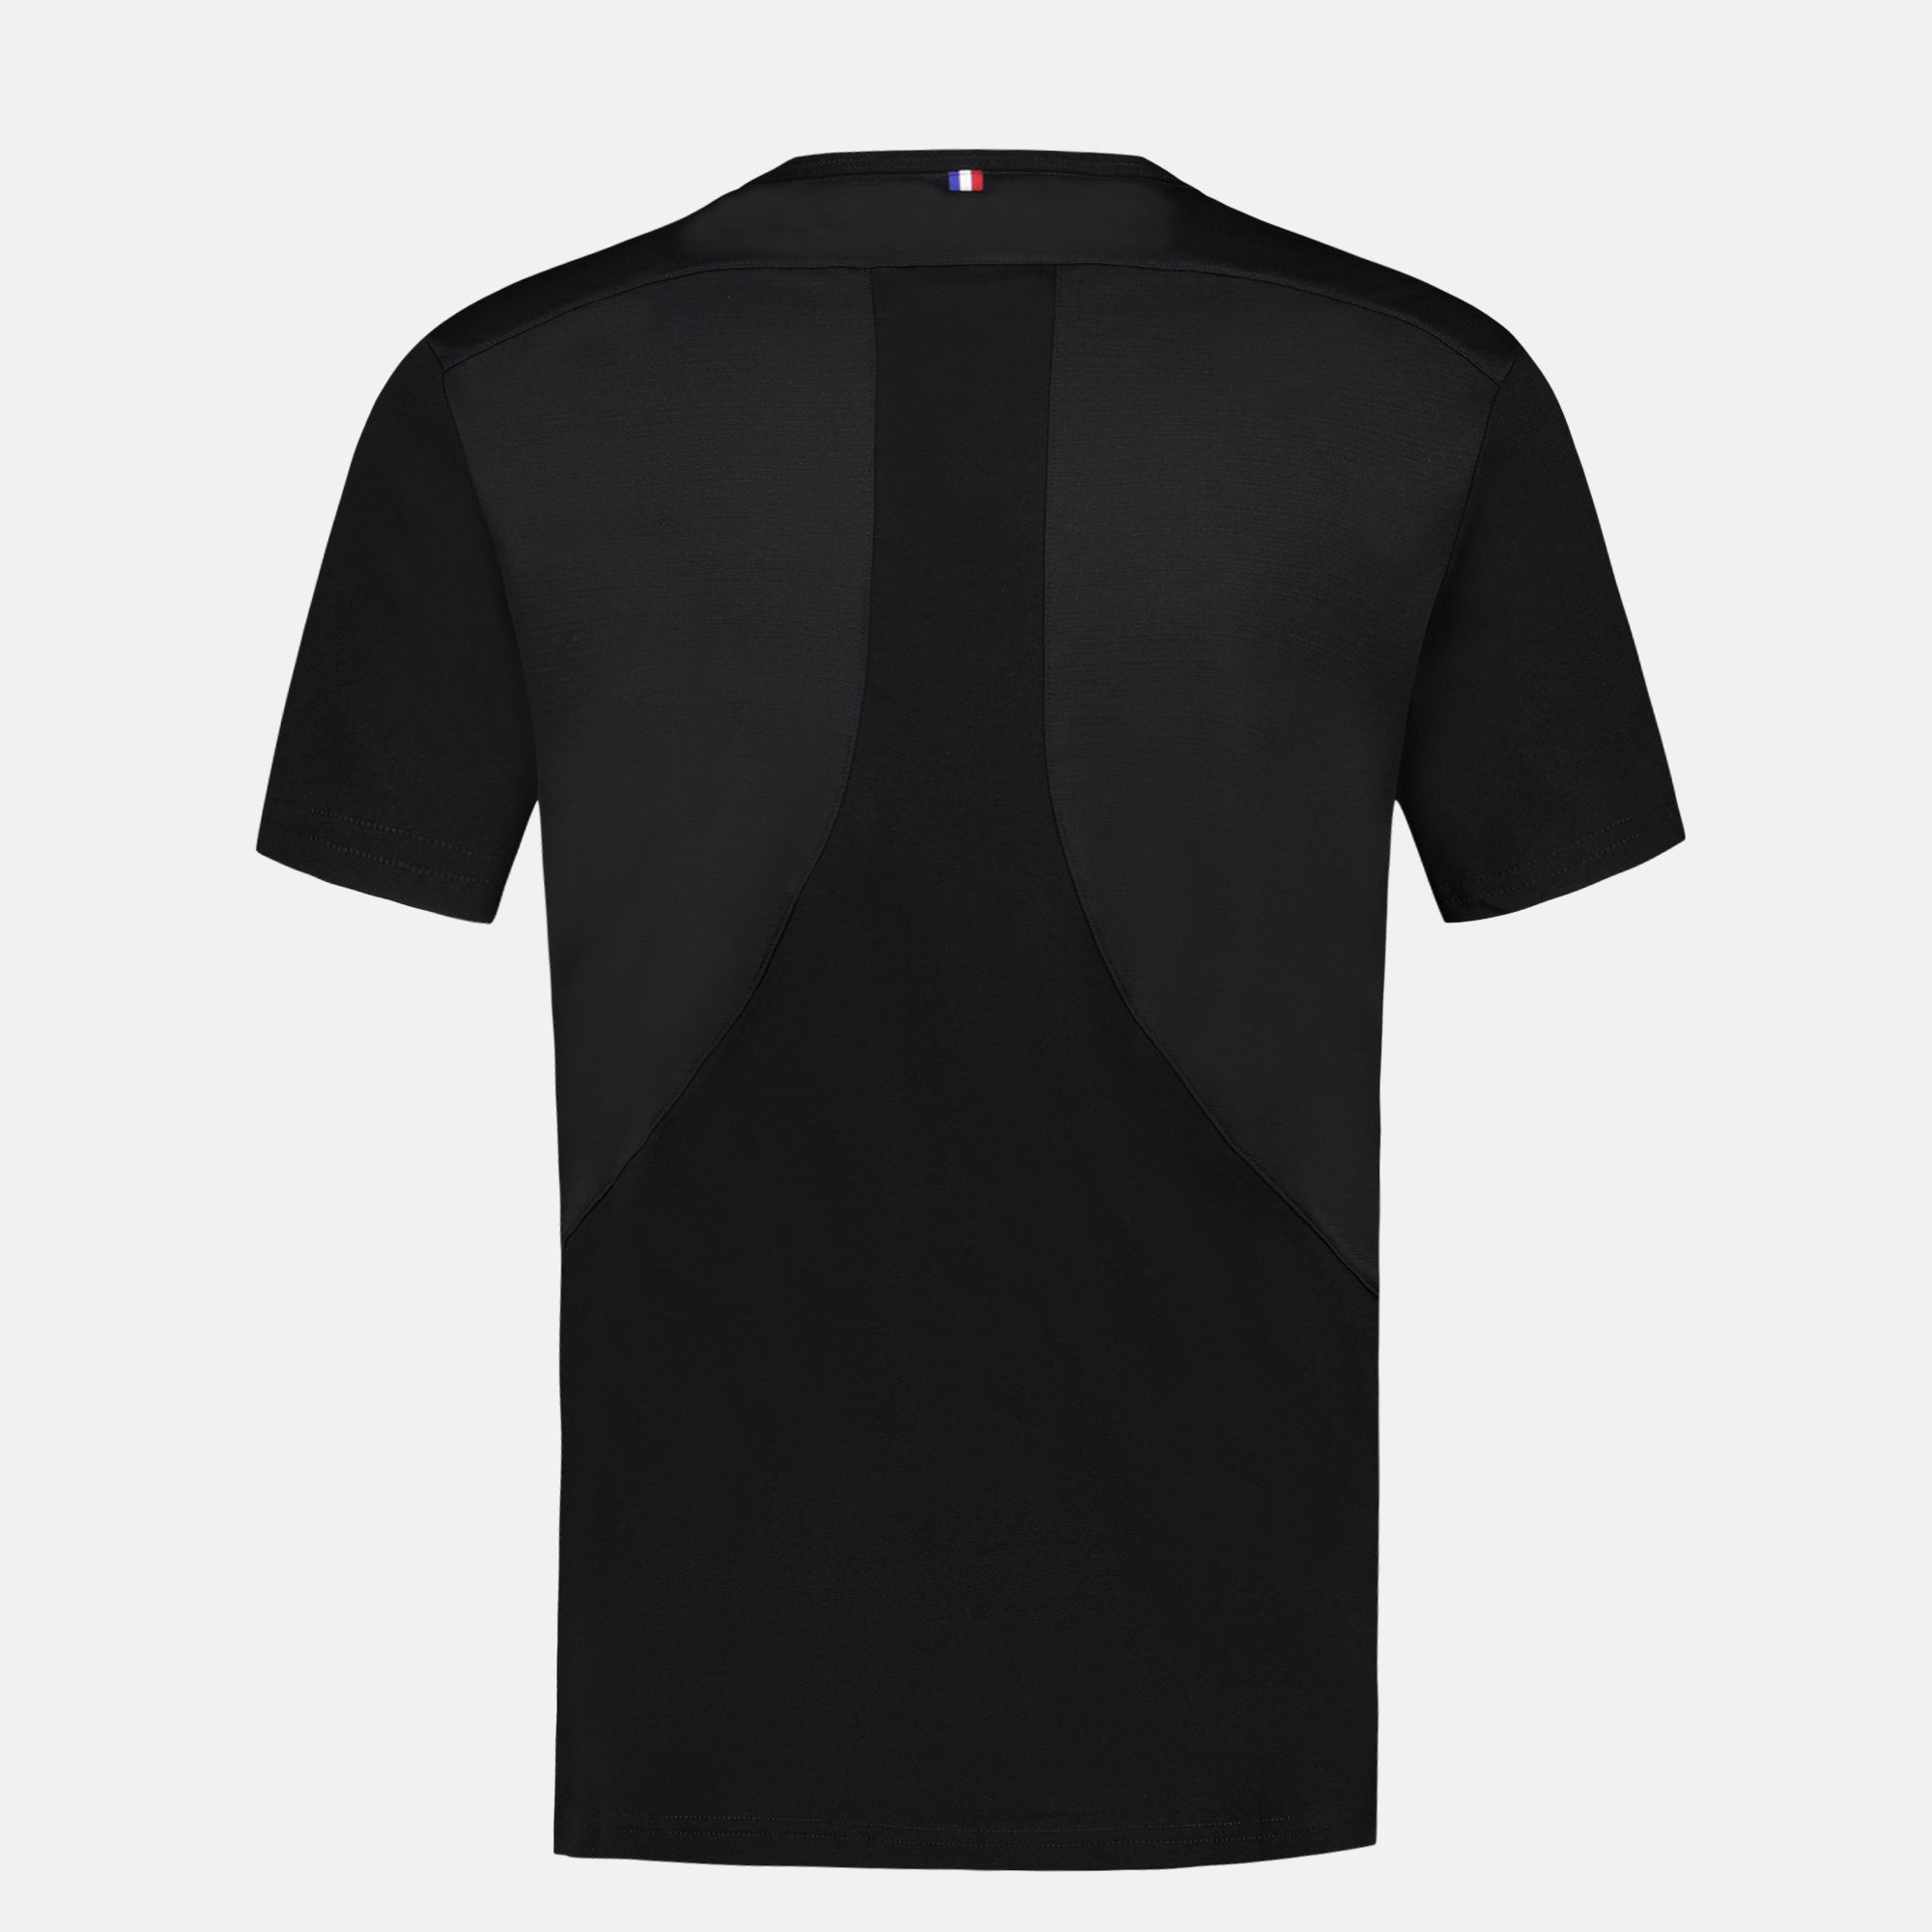 2410220-TRAINING SP Tee SS N°1 M black/orange pe | T-shirt Homme